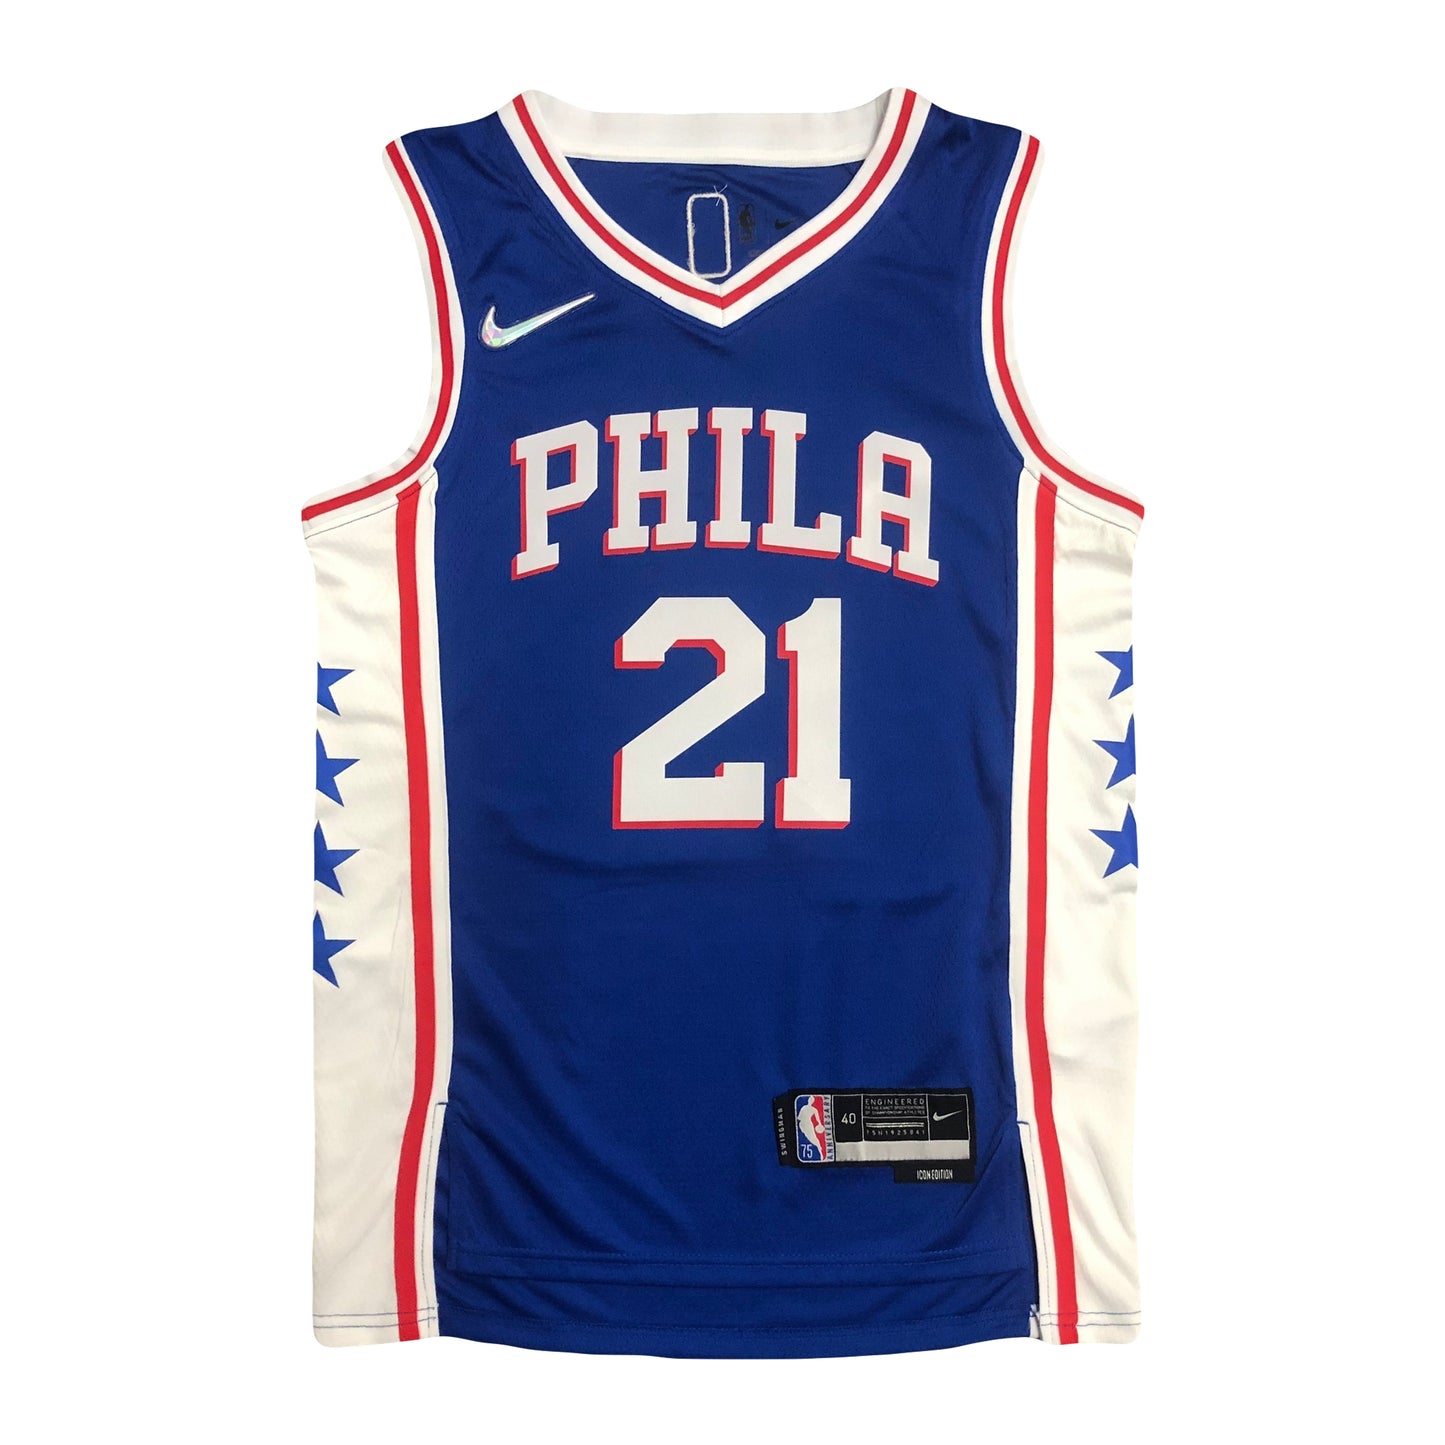 Philadelphia 76ers jersey